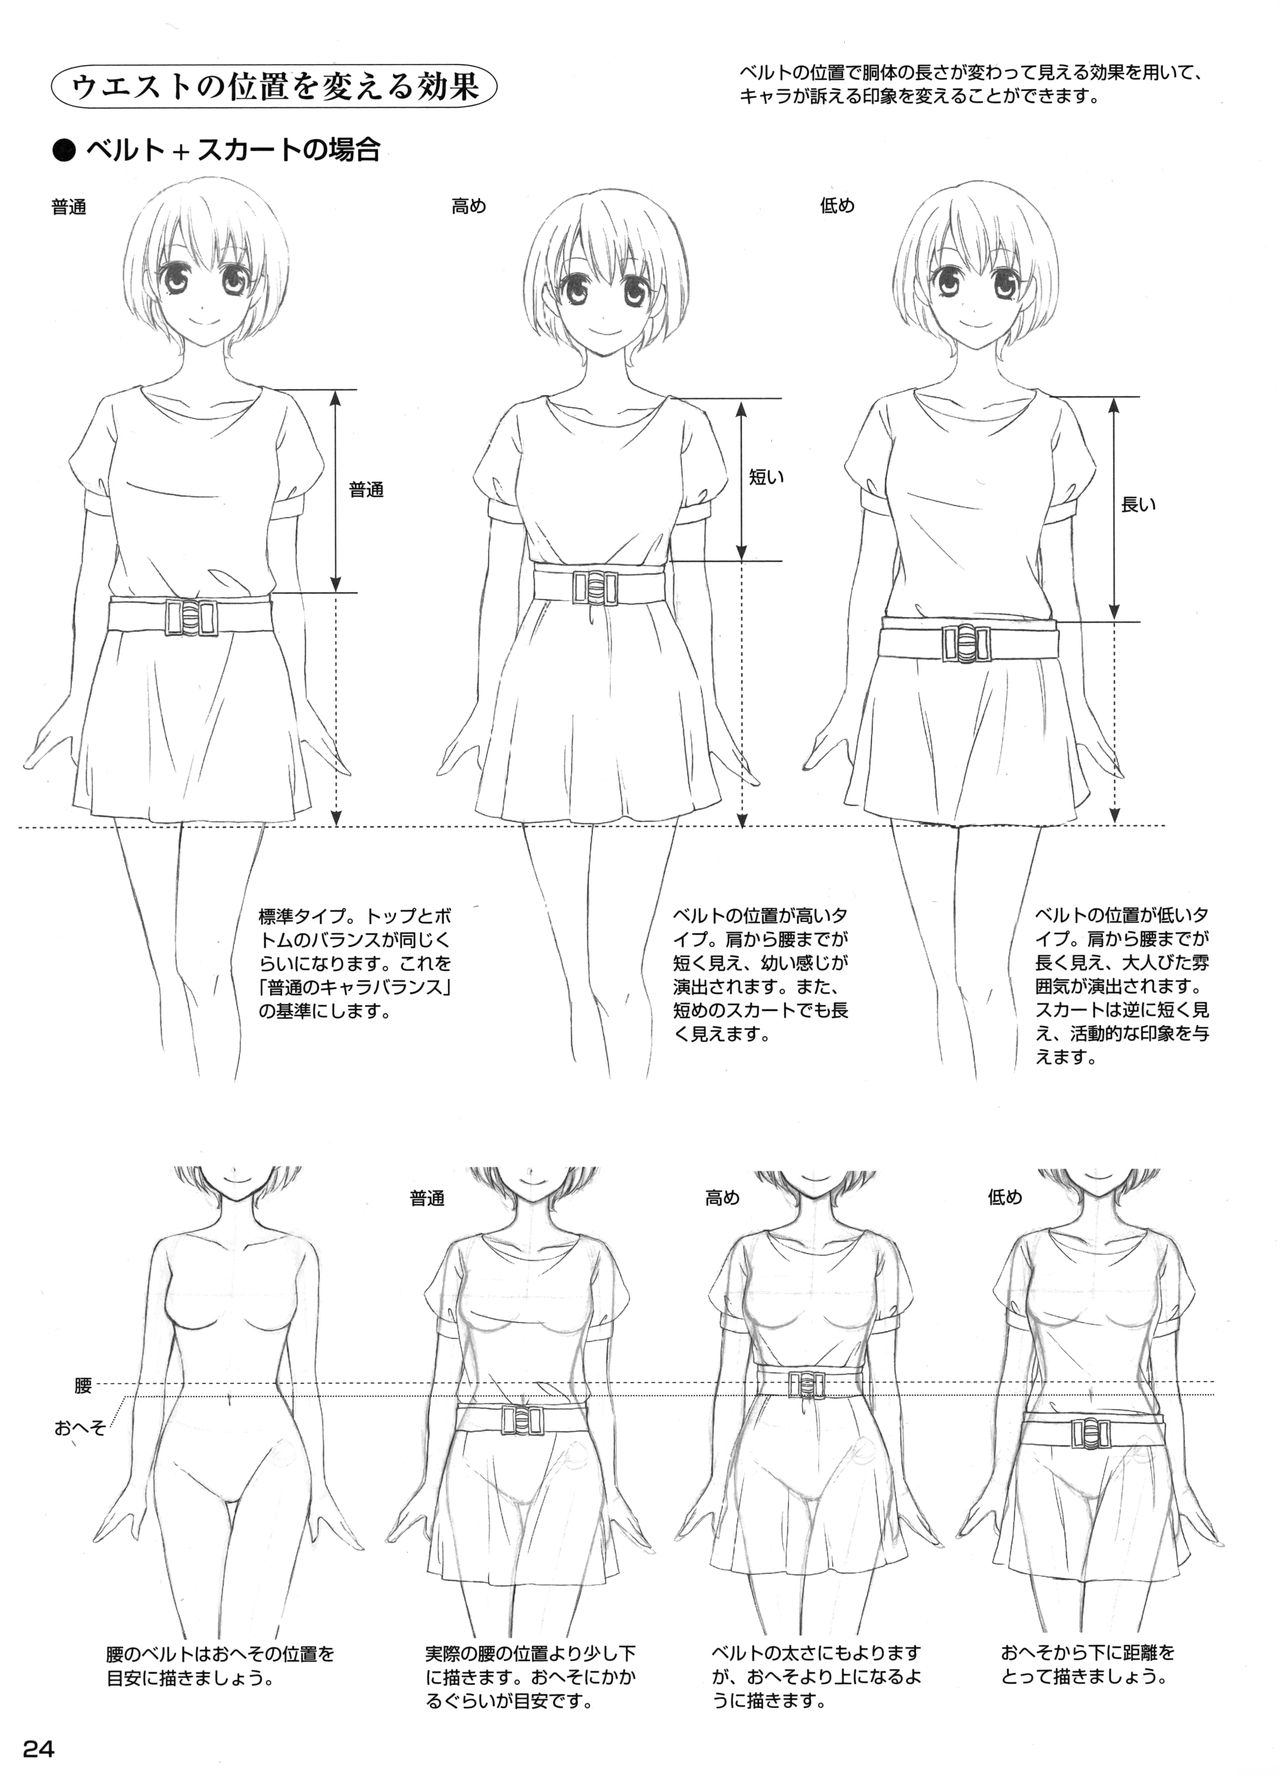 Manga no Kiso Dessin - Onnanoko Costume hen 24